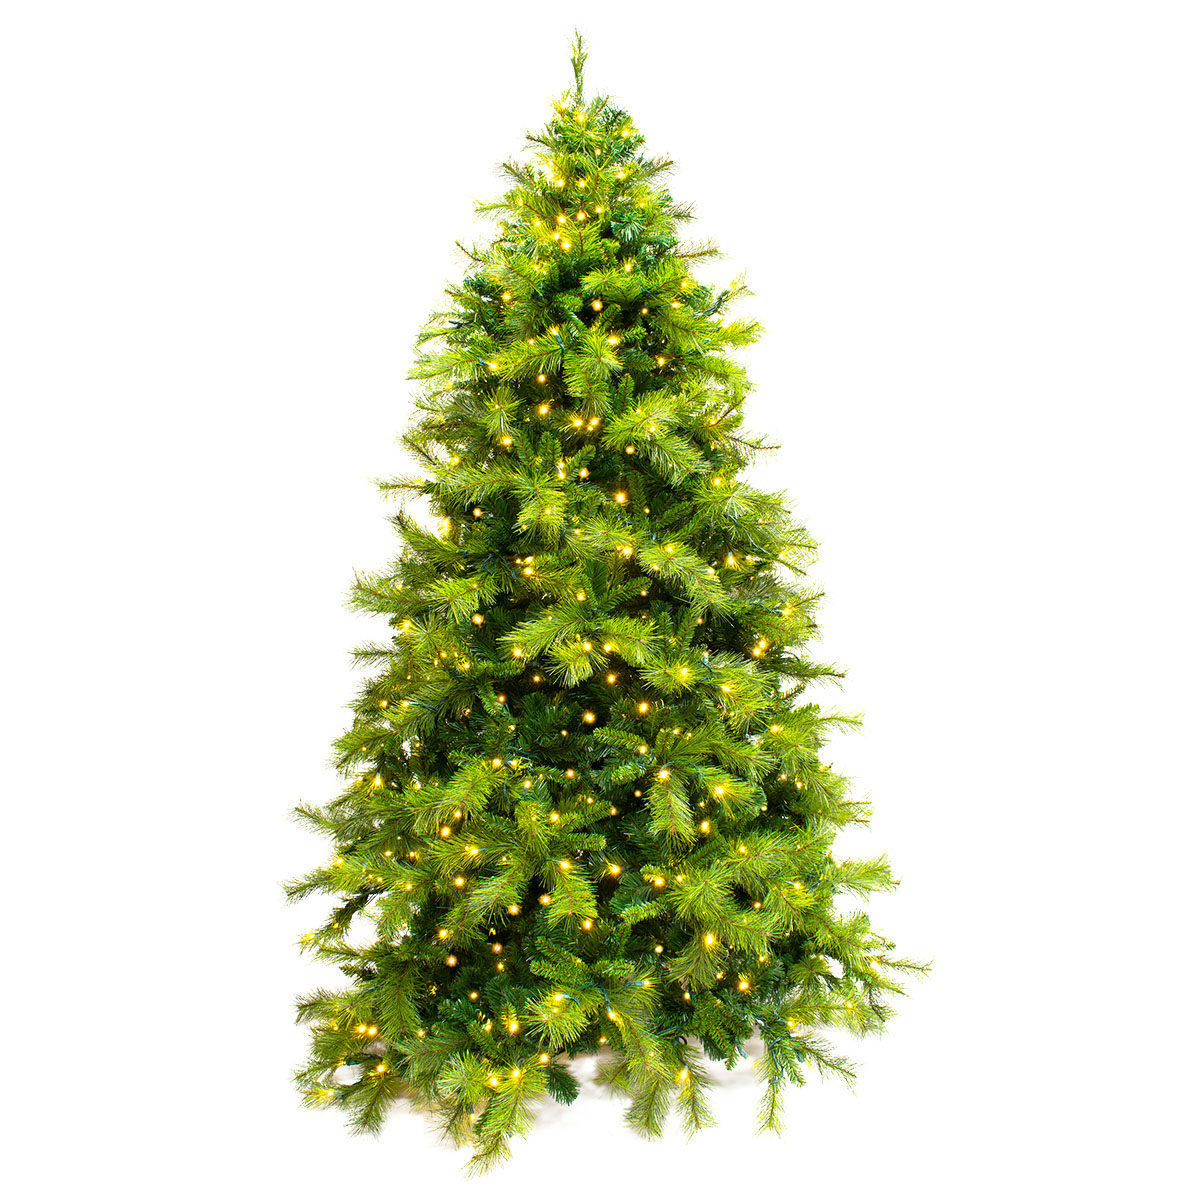 Mixed Pine Christmas Tree - Warm White Glow LED Lights - One-Plug Pole Power Supply - 7.5ft Tall